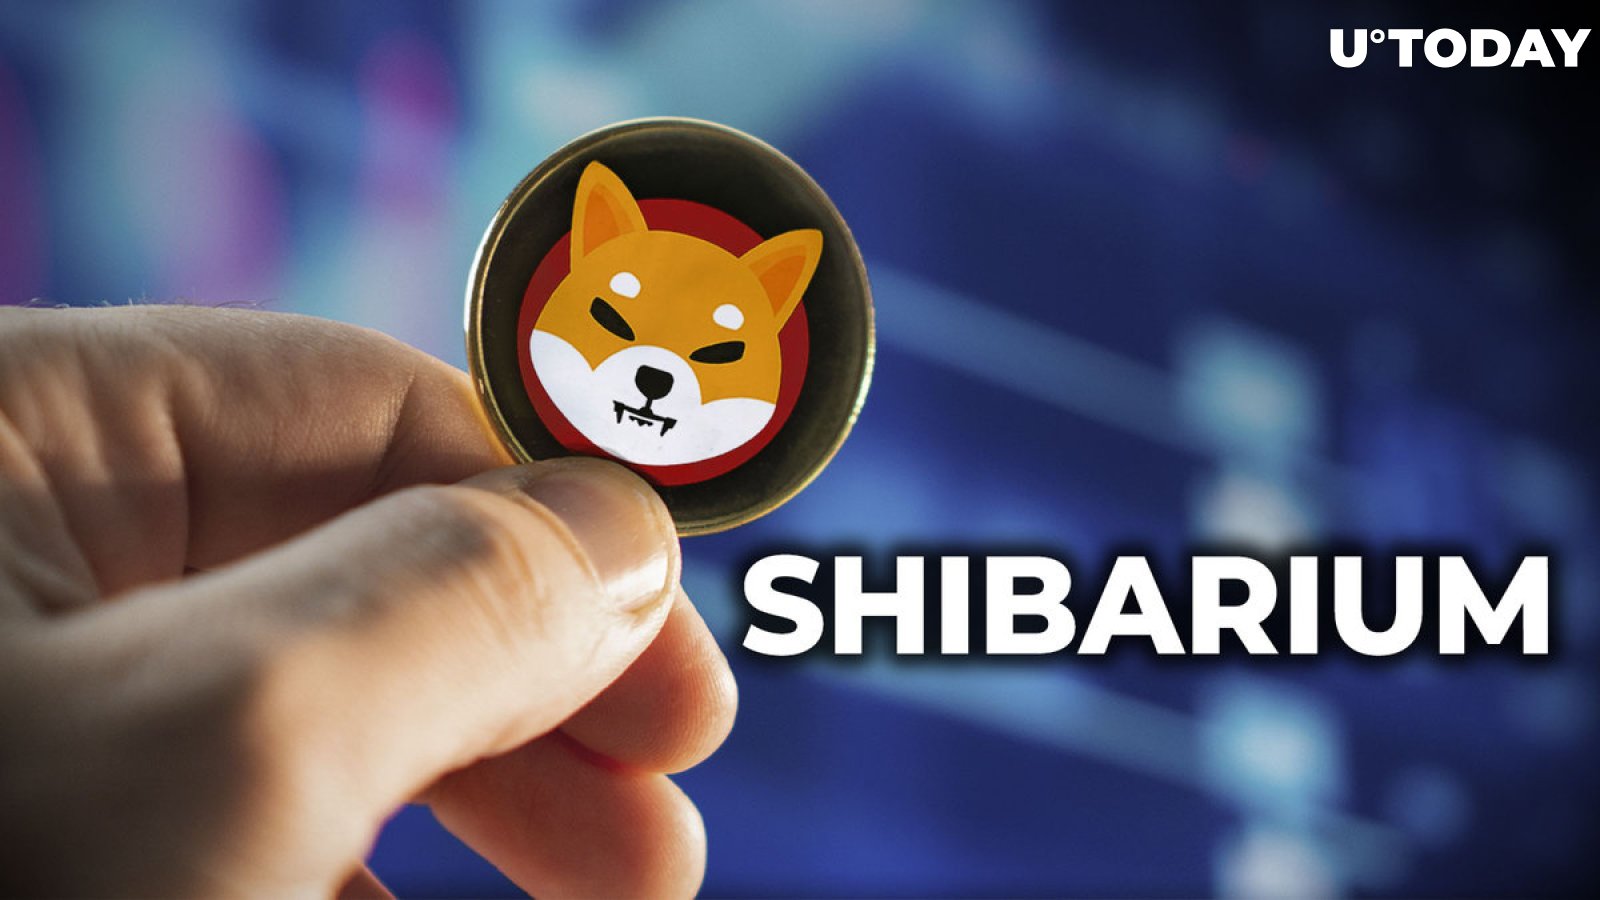 Shibarium Reaches New Adoption Record, Here Are Details